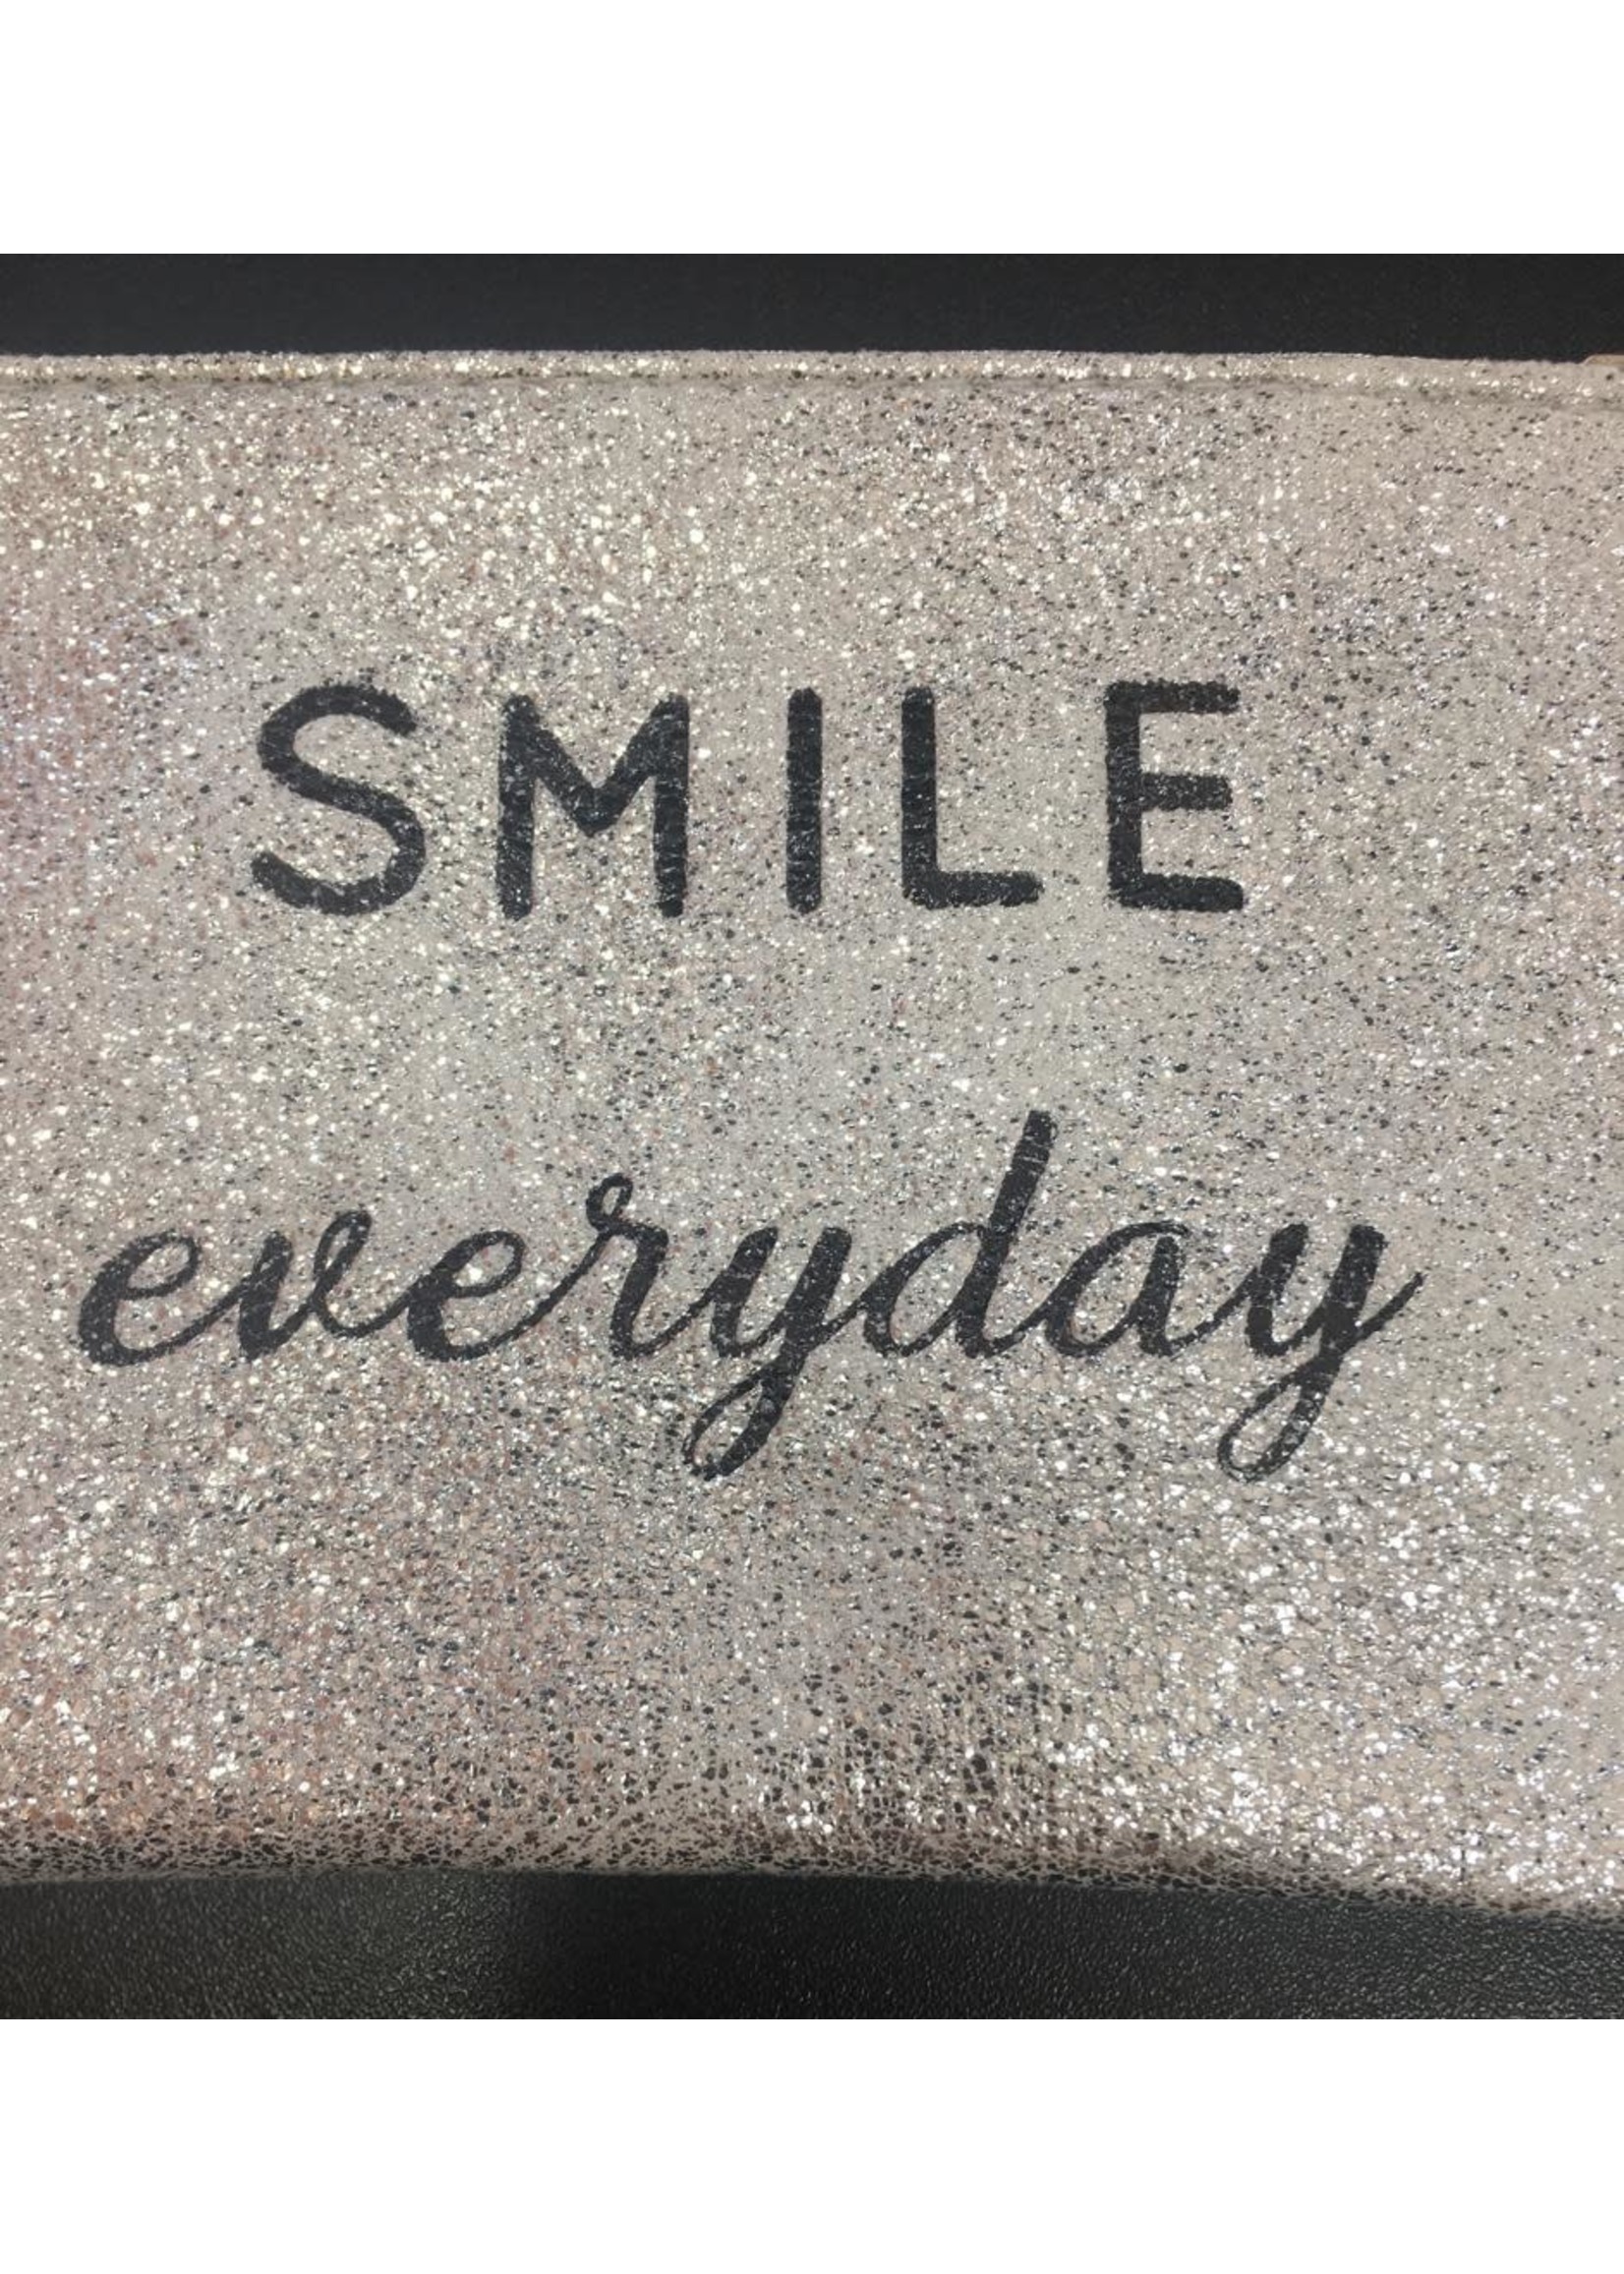 Smile everyday glitter purse